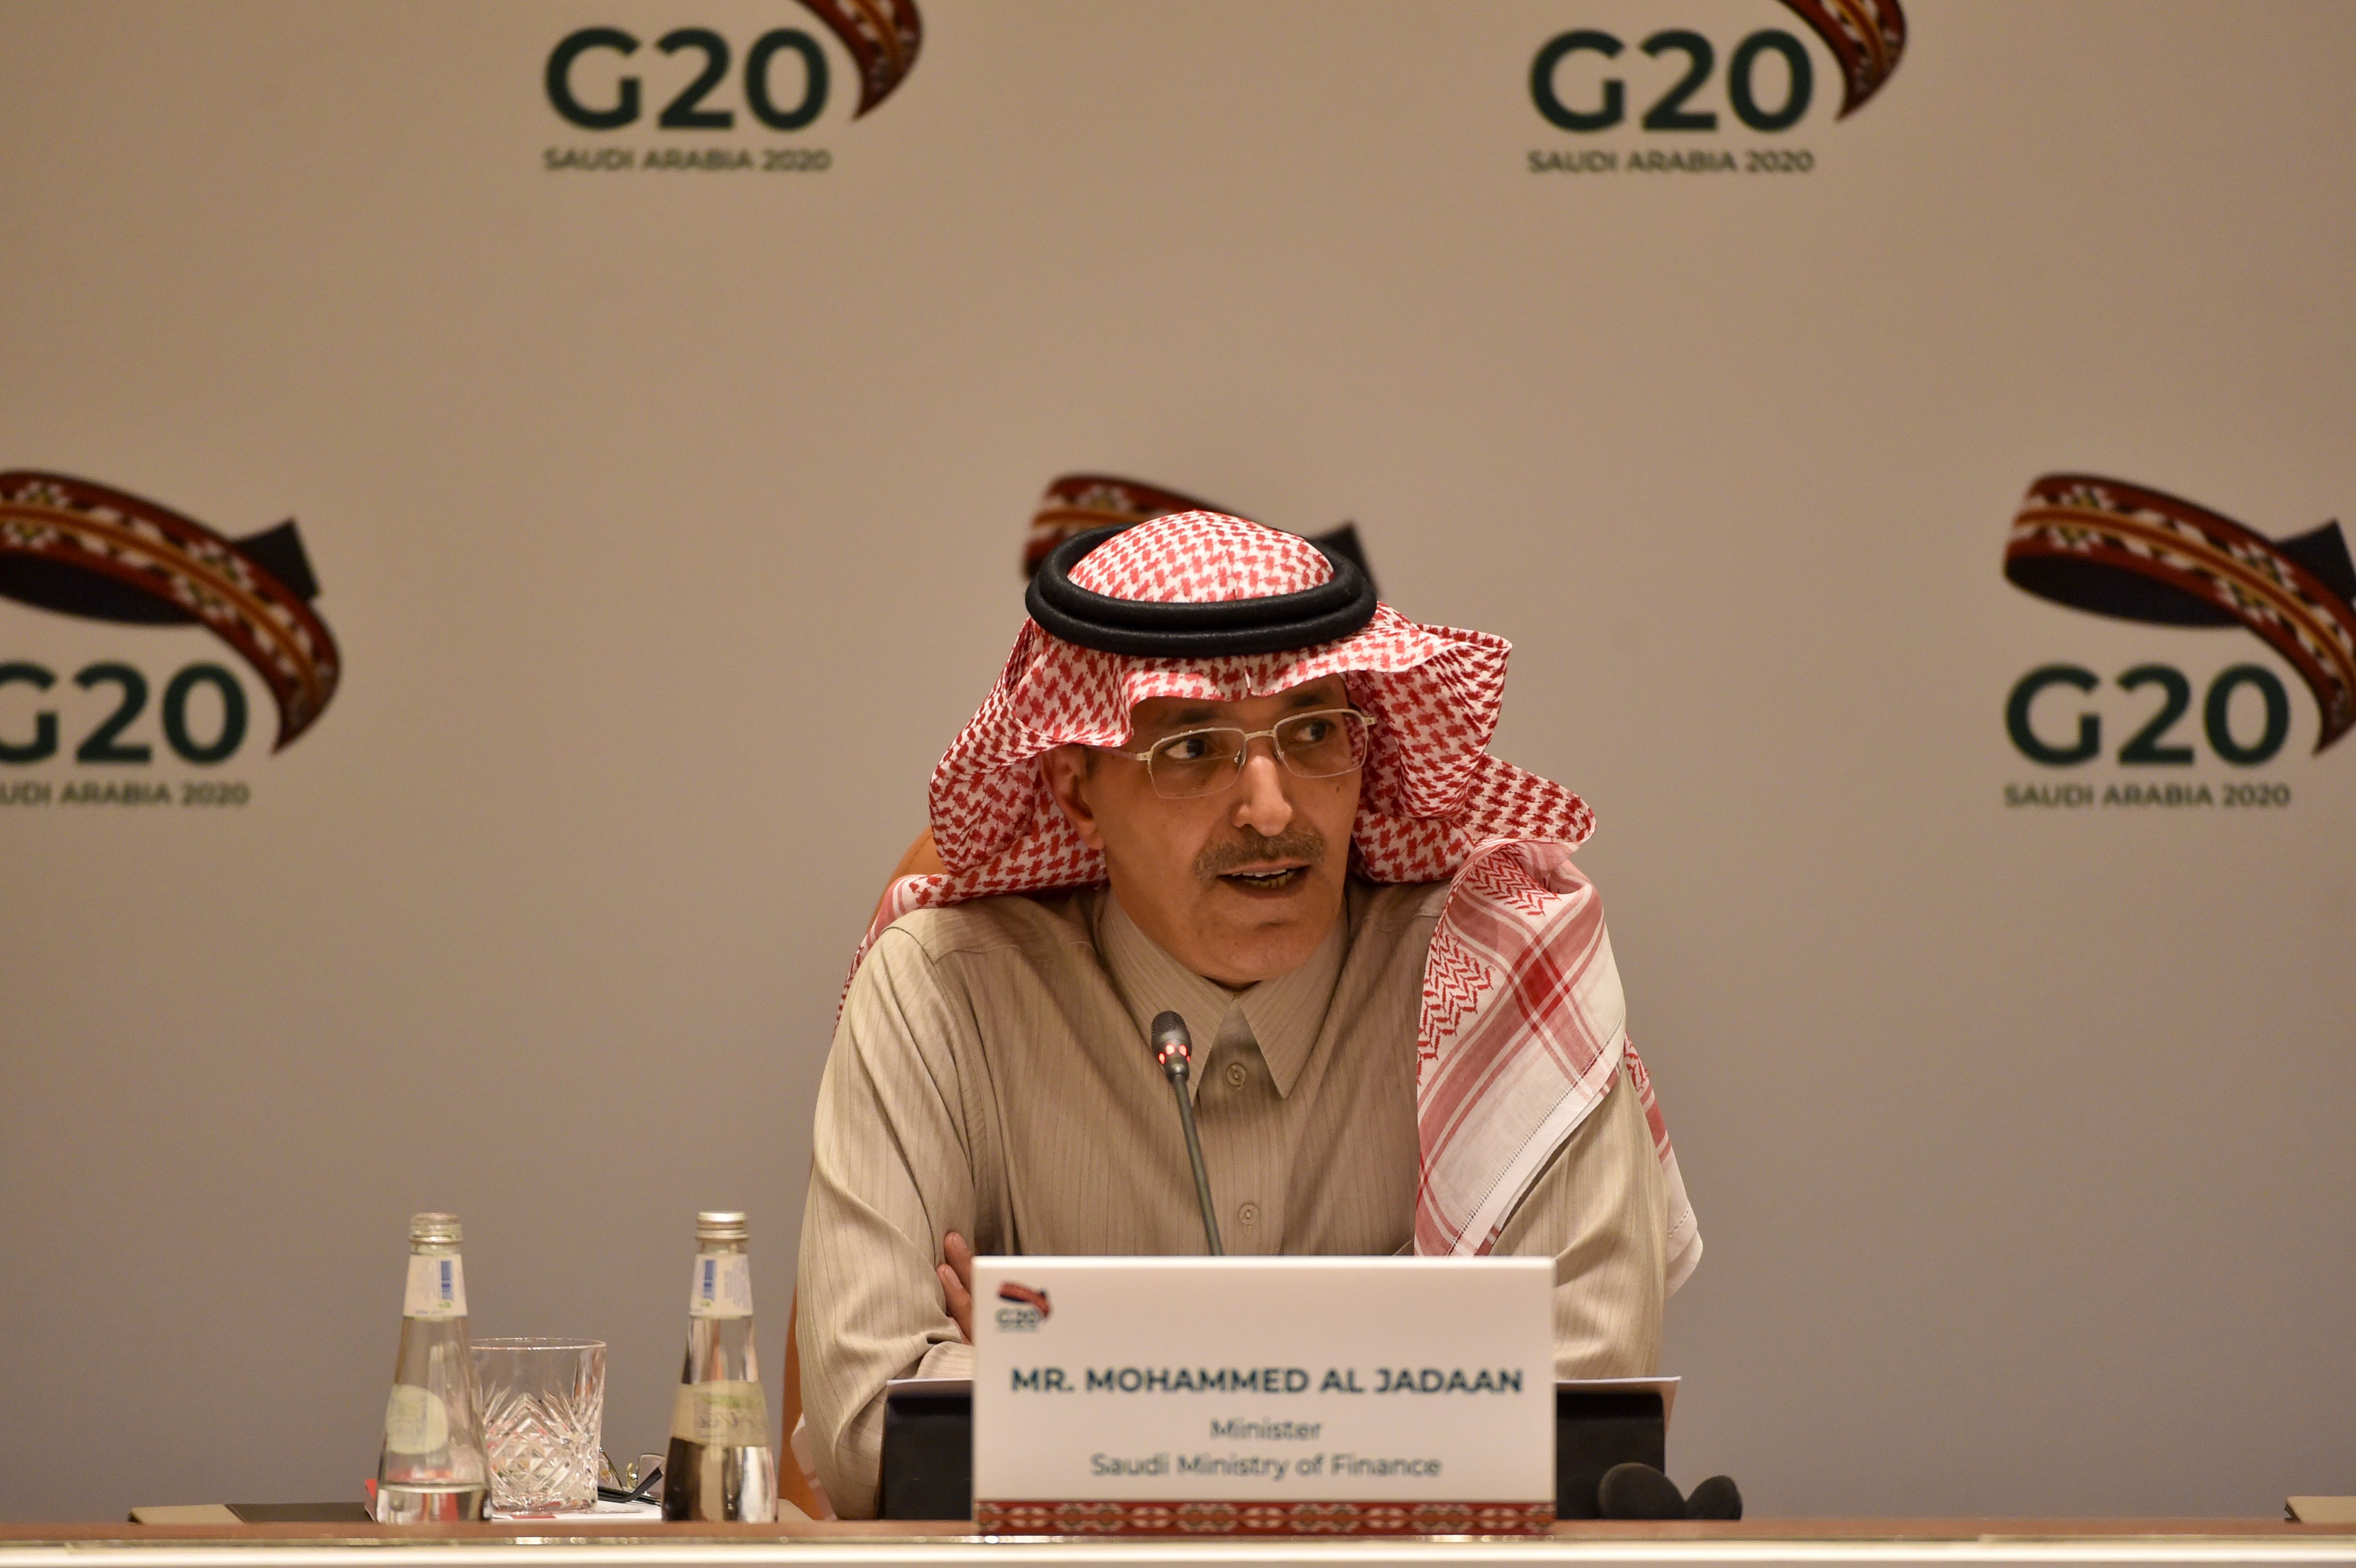 Saudi Minister of Finance Mohammed Al-Jadaan at the G20 summit in the Saudi capital Riyadh on February 23.